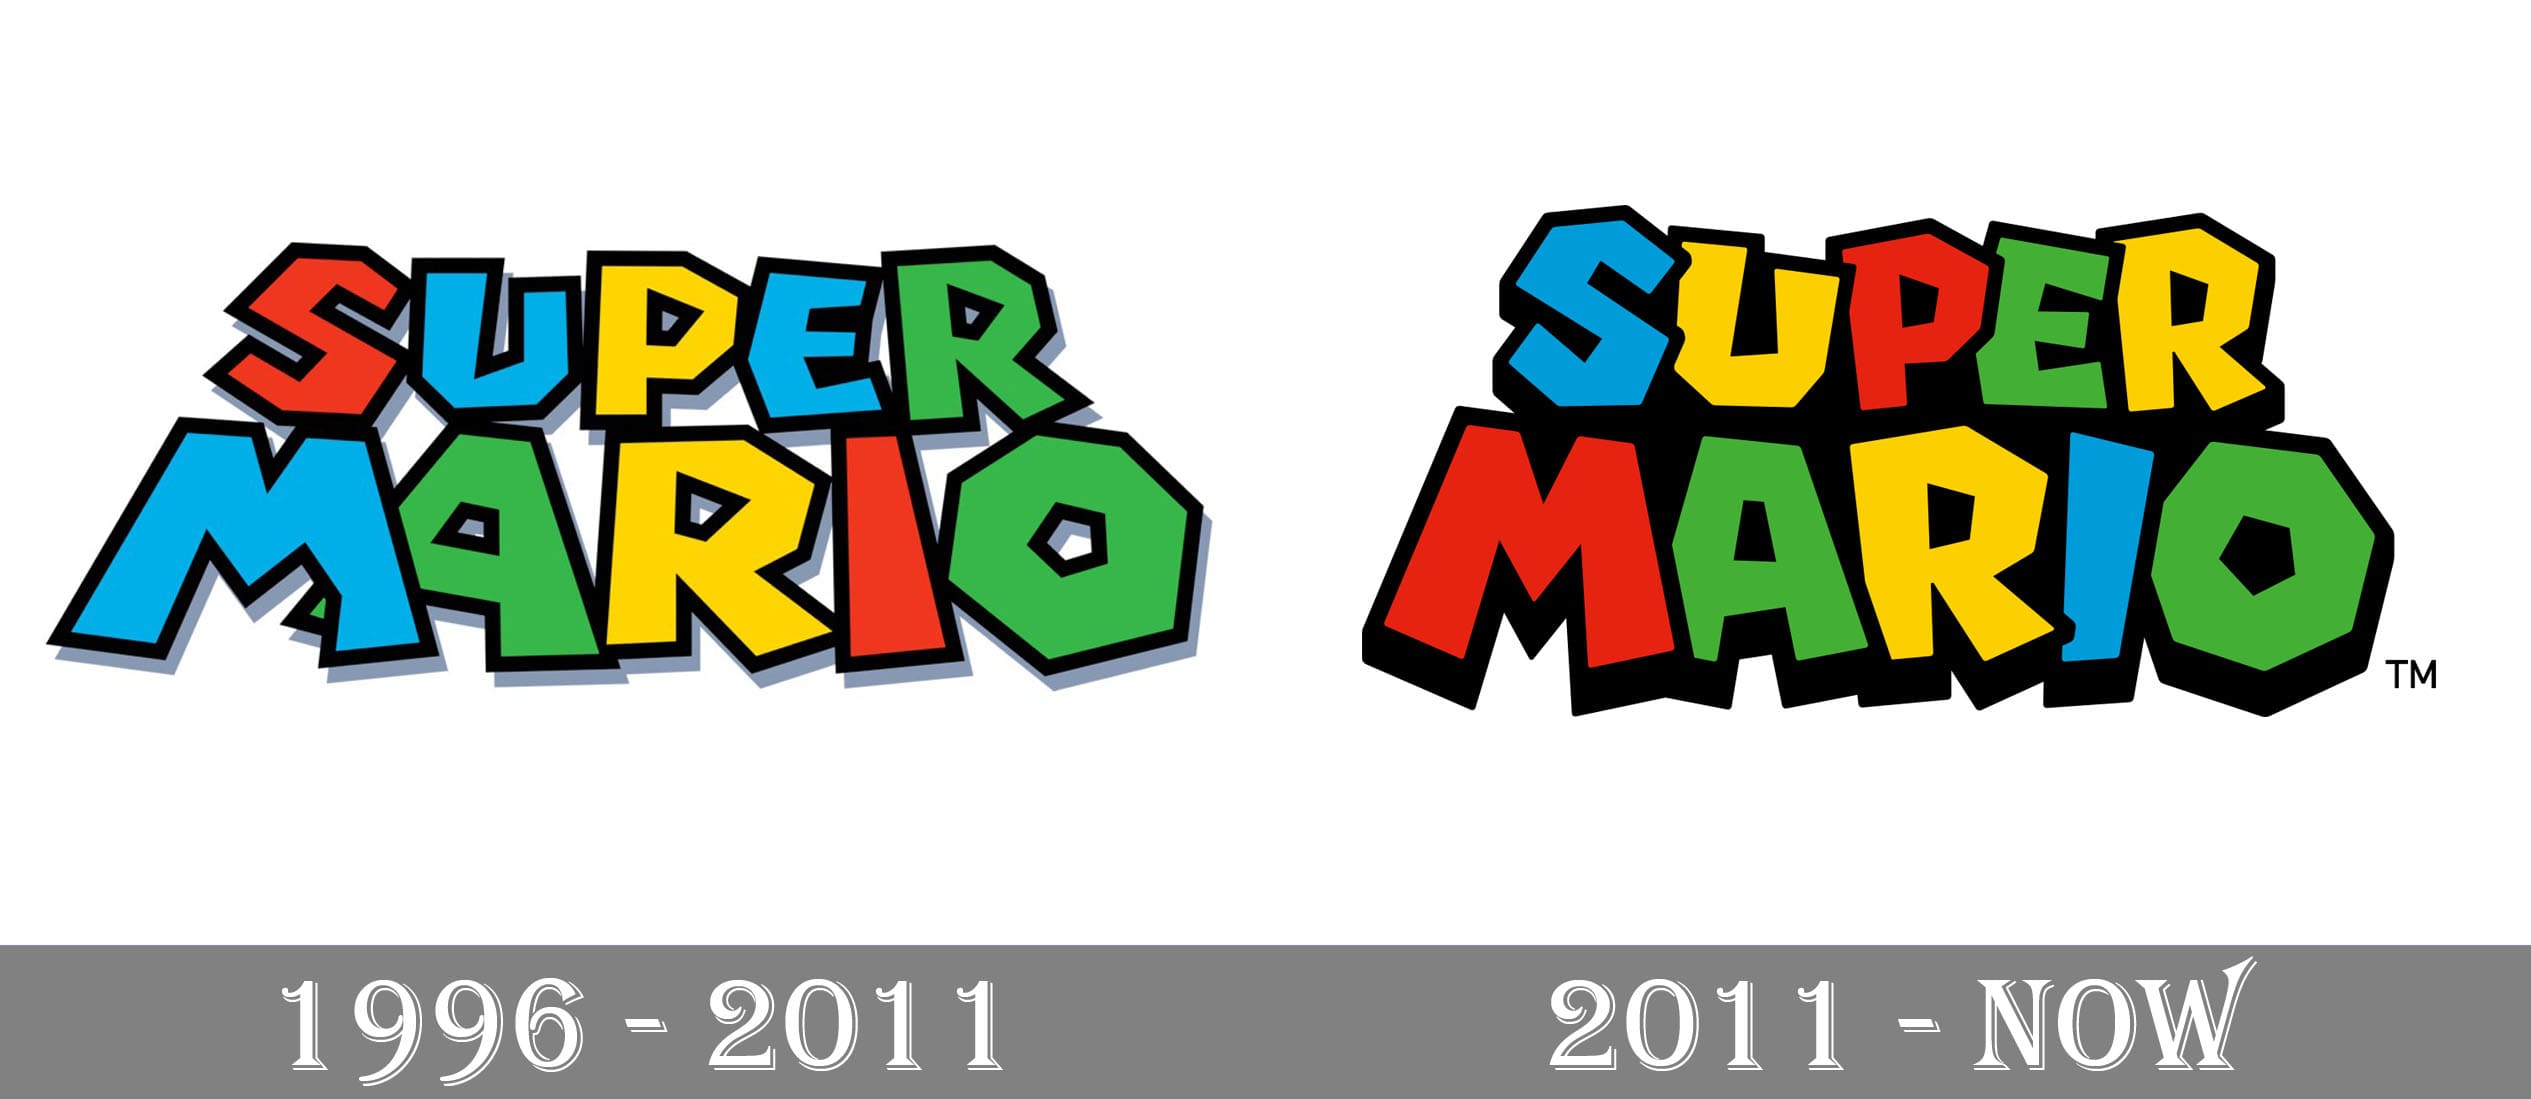 HD Super Mario Bros Logo By Turret3471 On DeviantArt | annadesignstuff.com